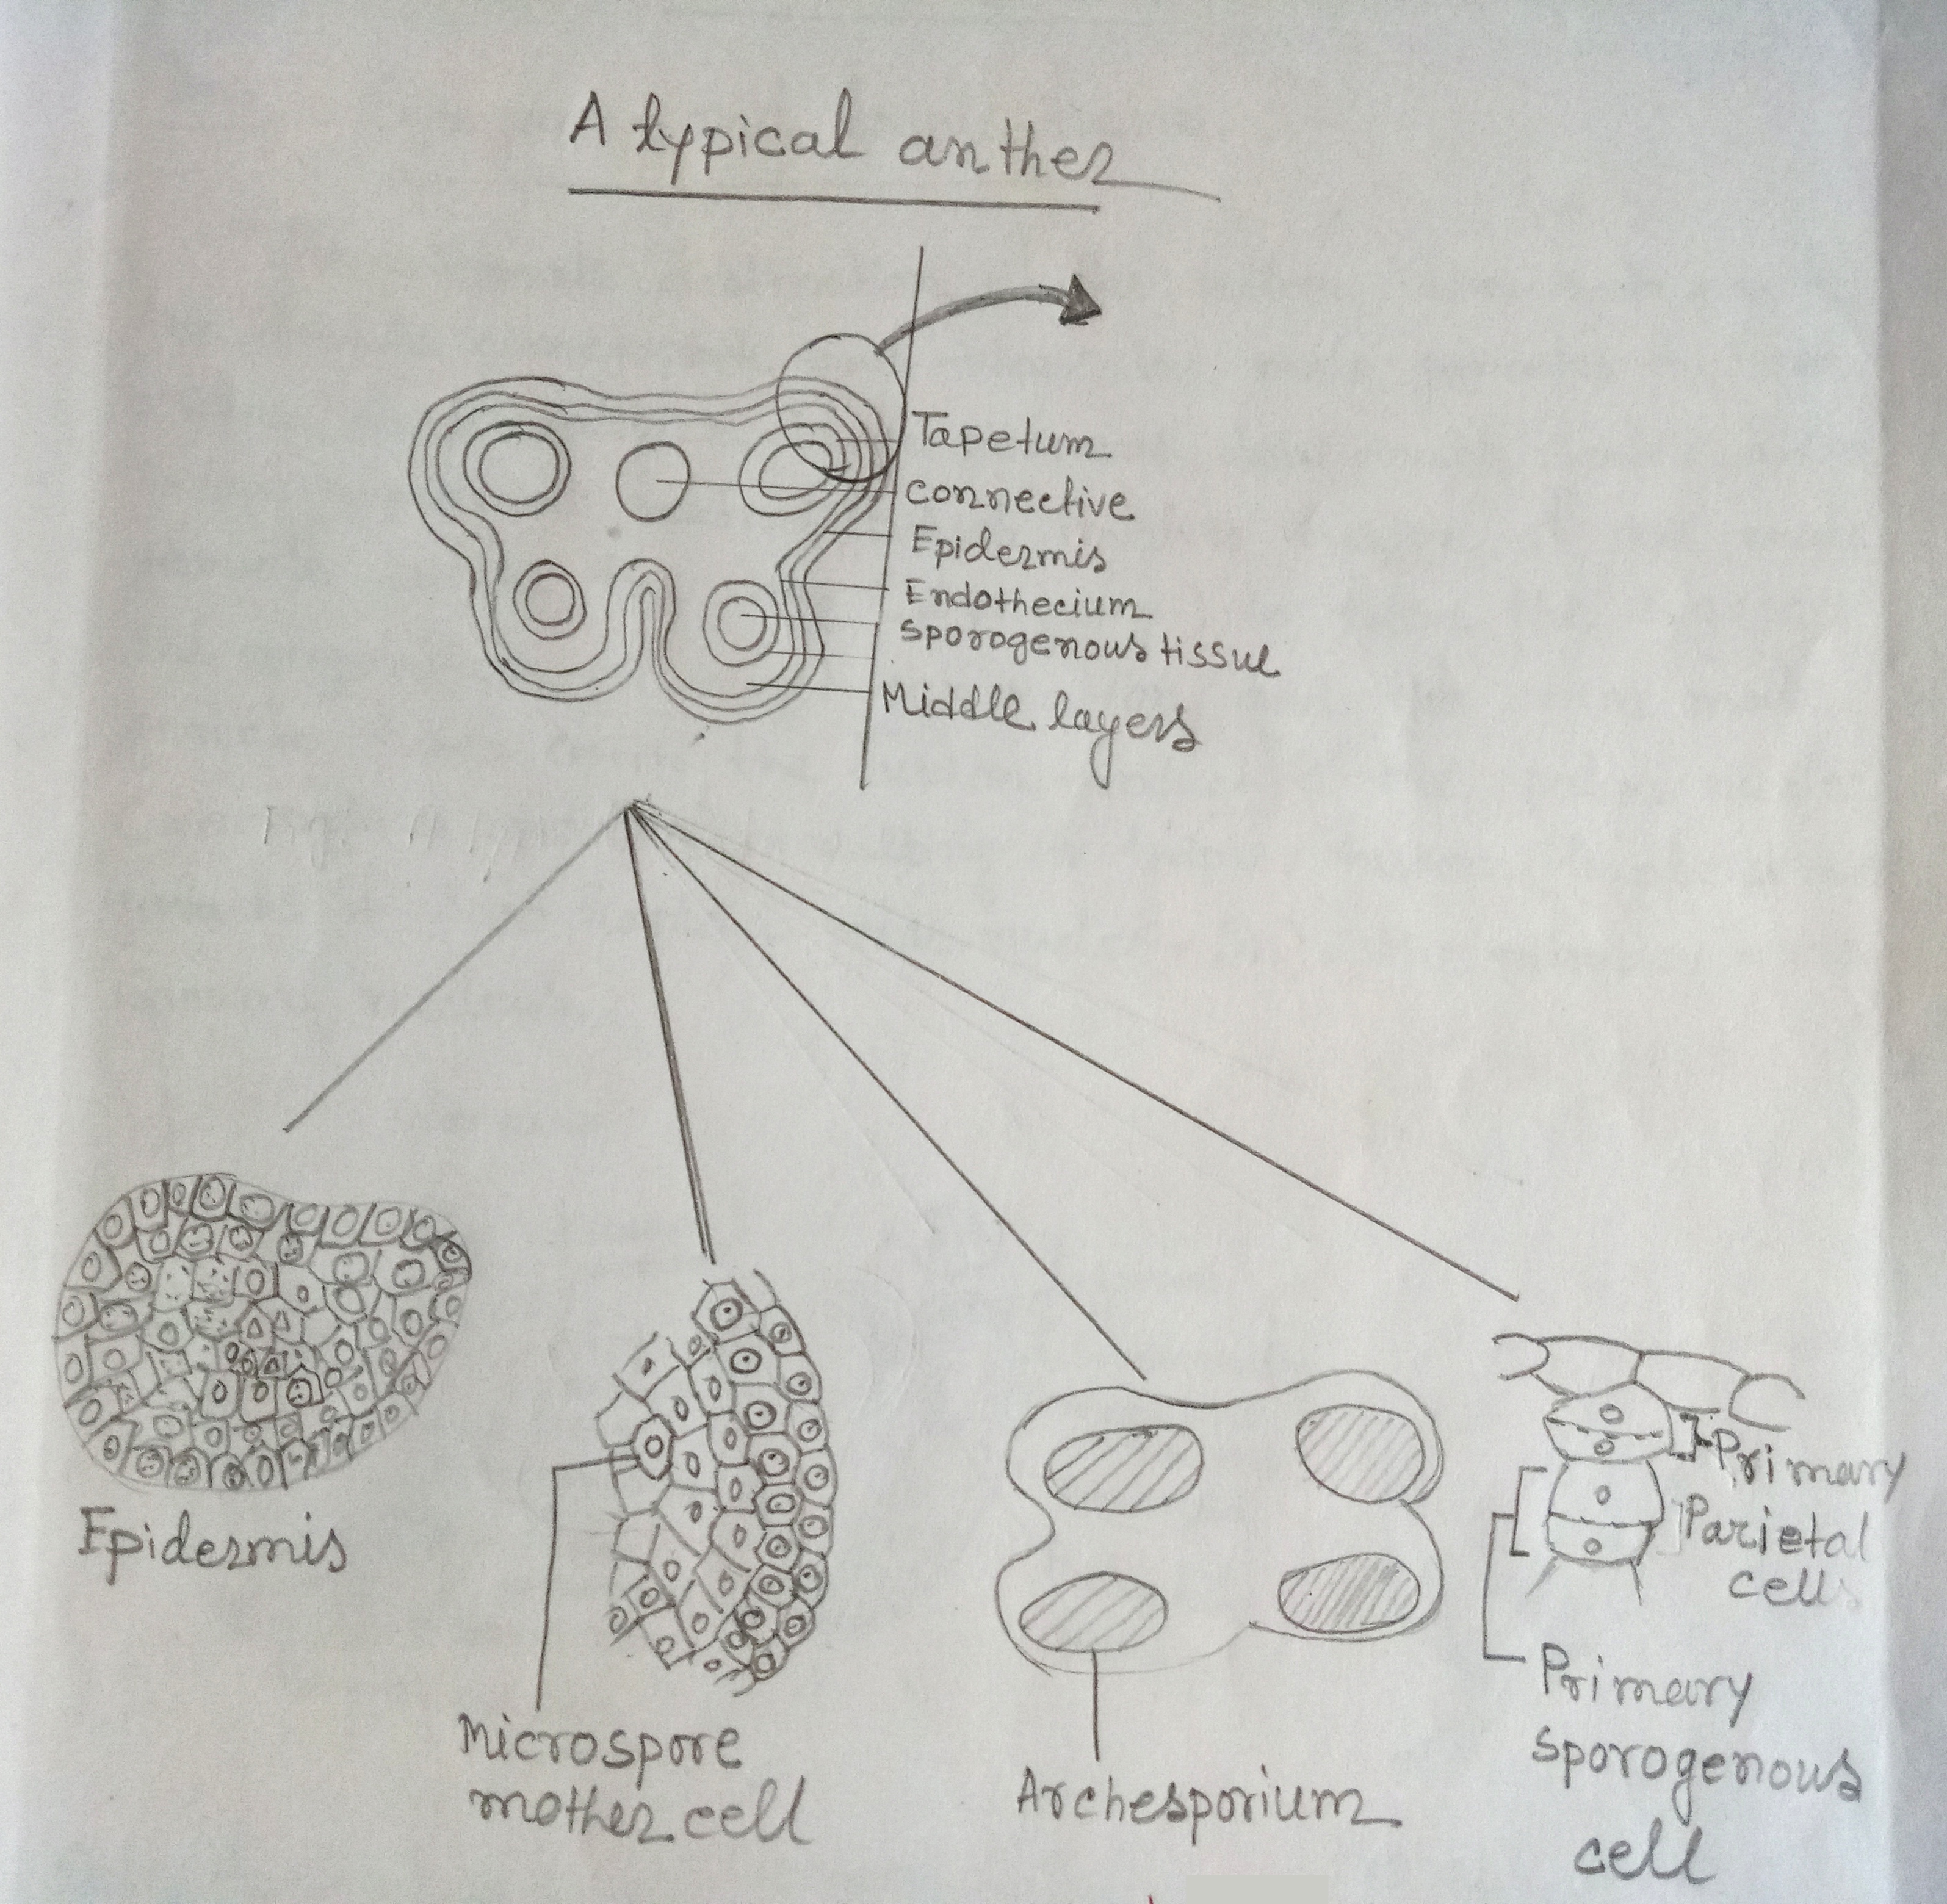 Diagrammatic representation of different stages of development of microsporangium